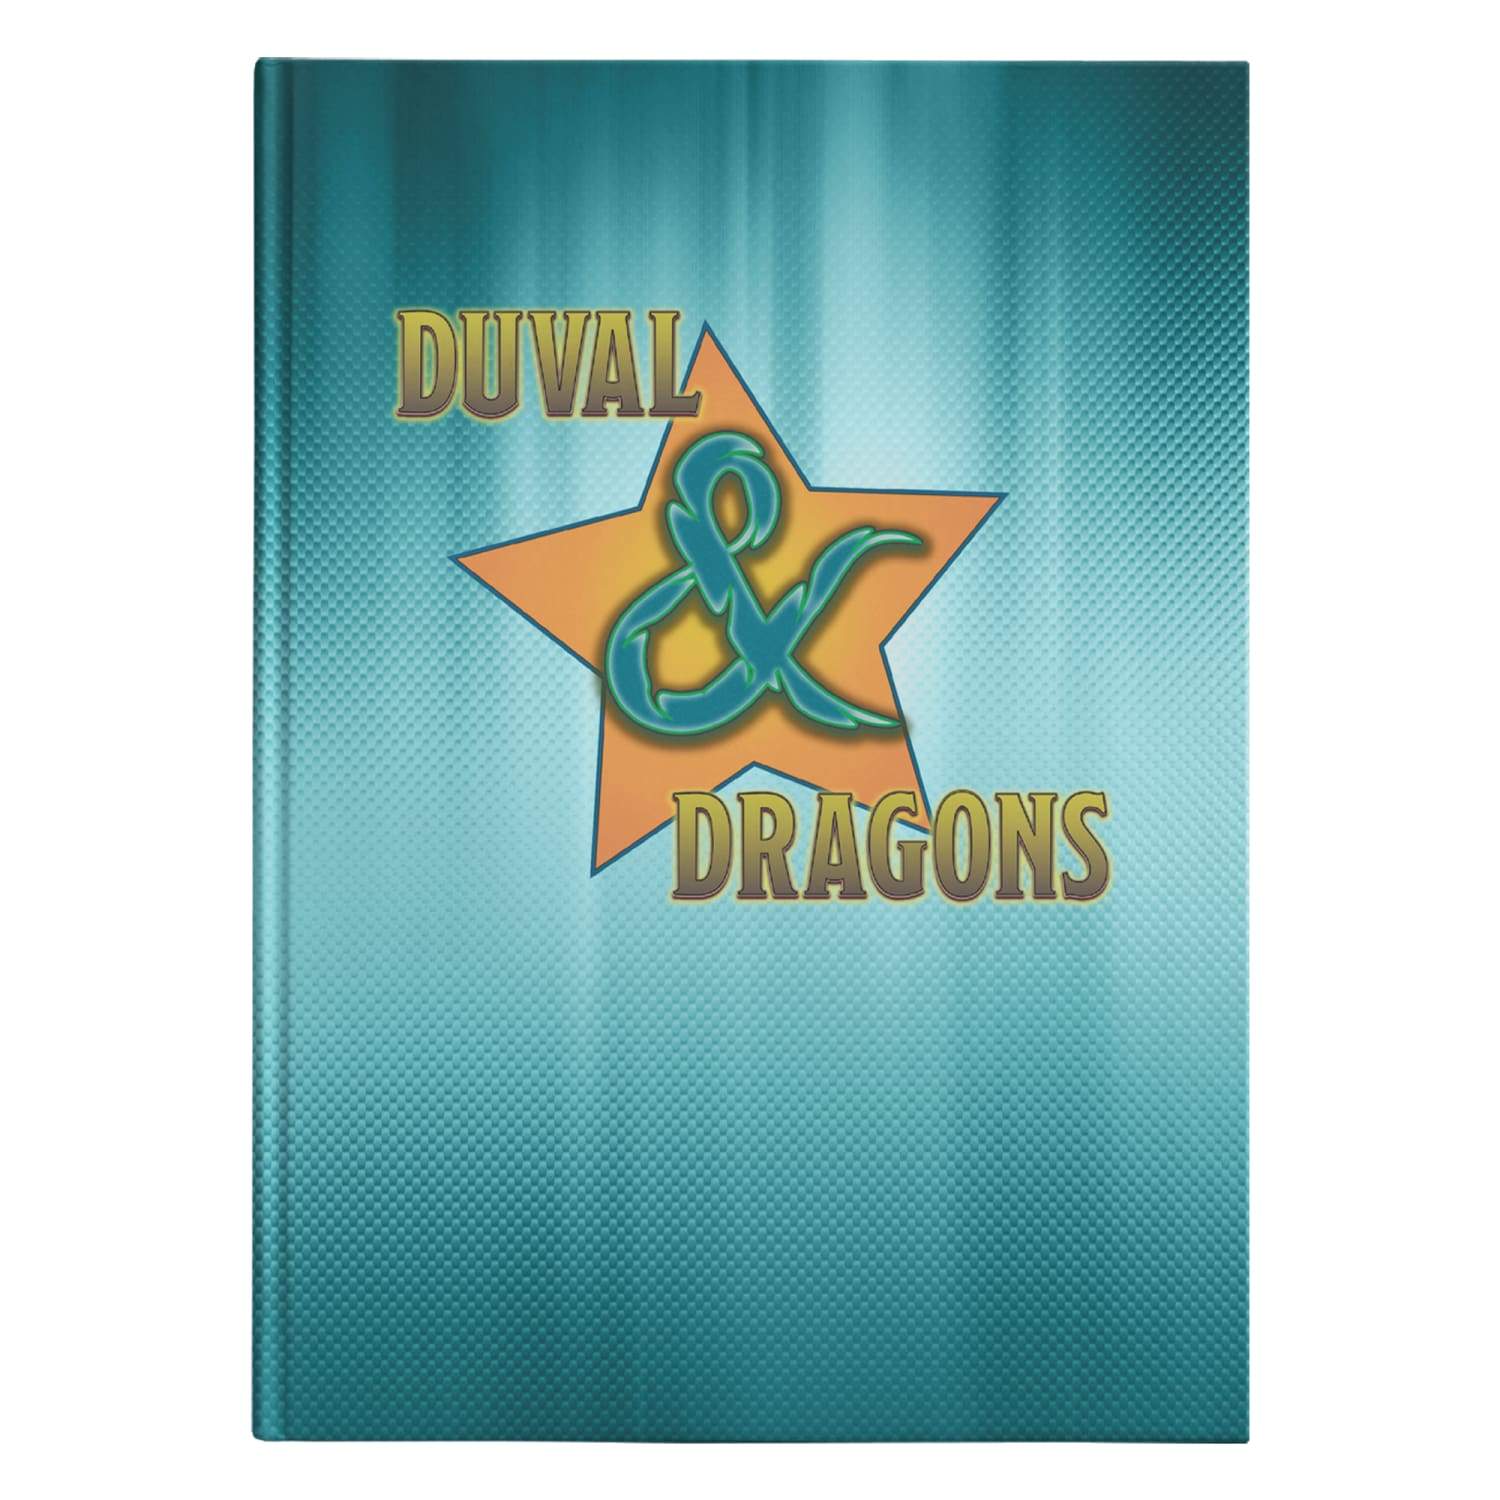 Duval & Dragons Superstar Logo Hardcover Journal - Small (5.75 x 8) - Journals